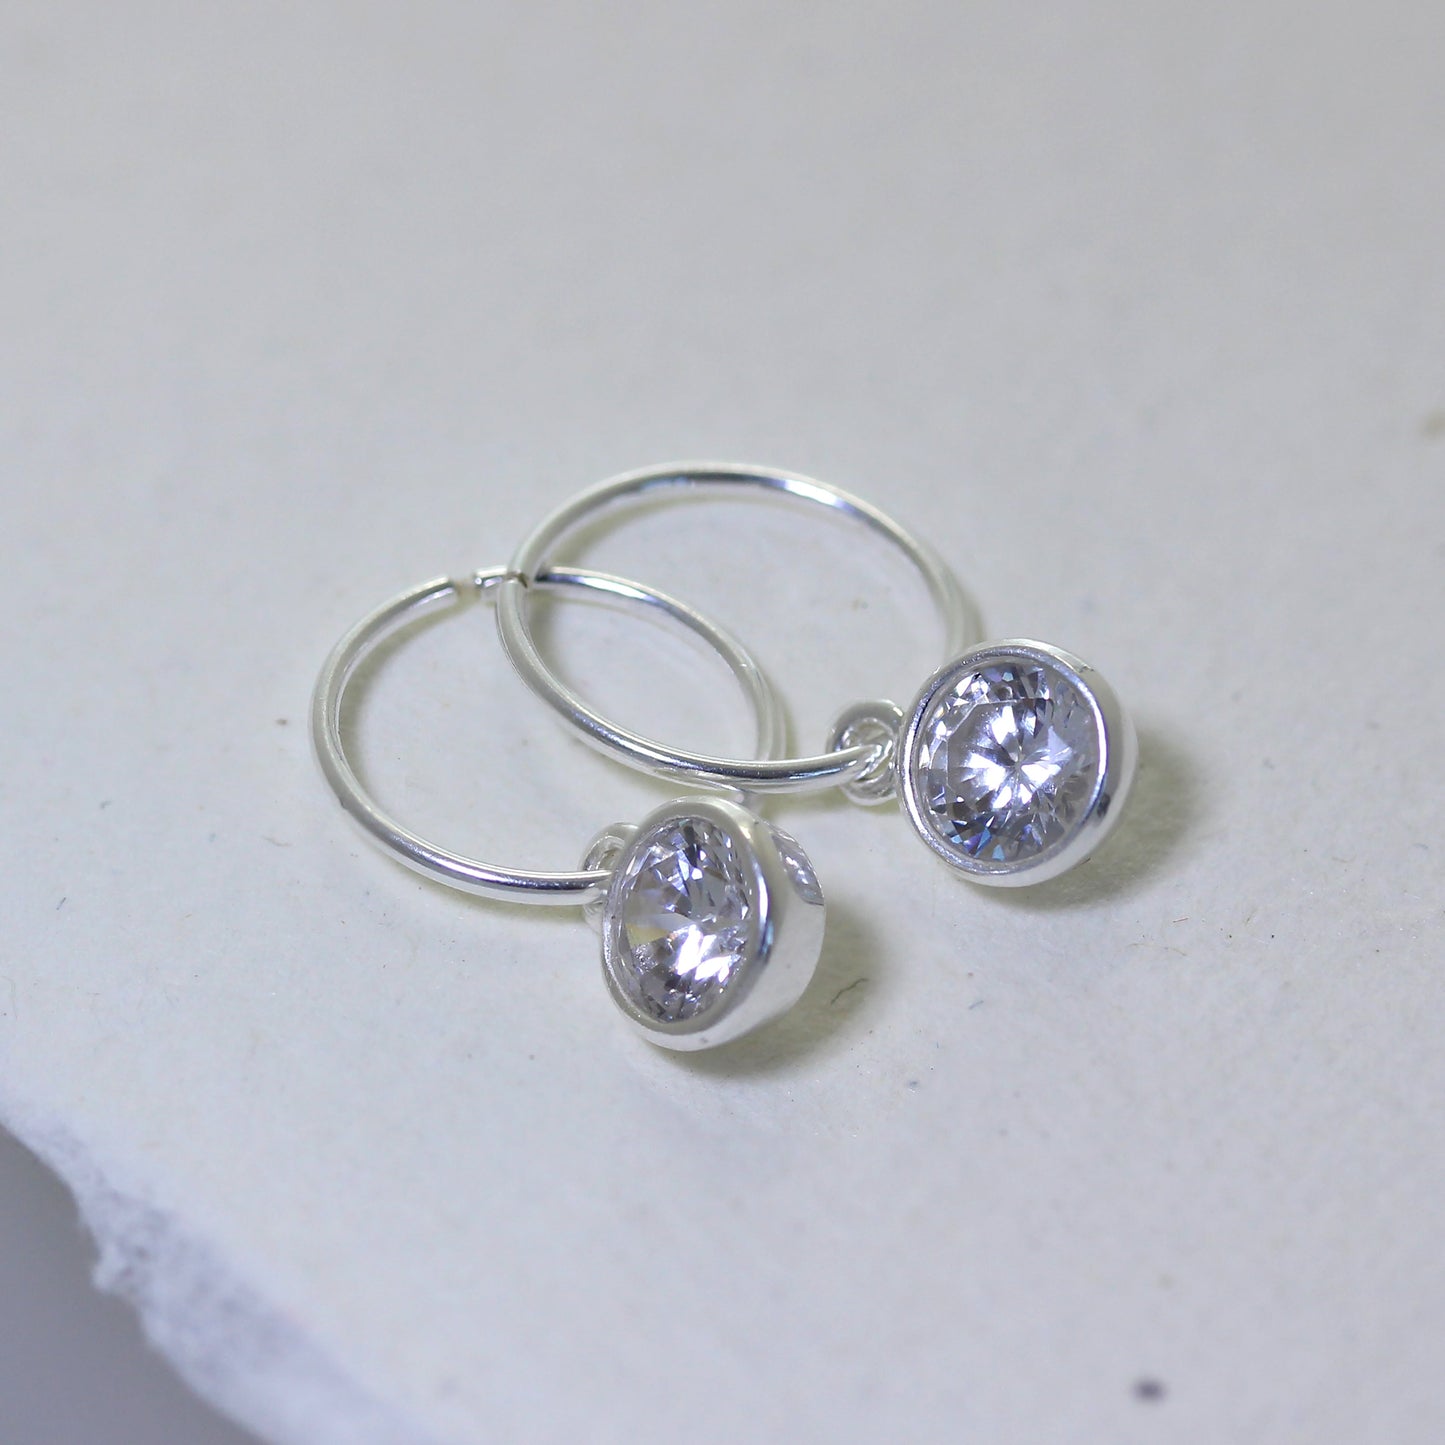 Sterling Silver Clear Crystal Rubover Charm Hoop 12mm Earrings